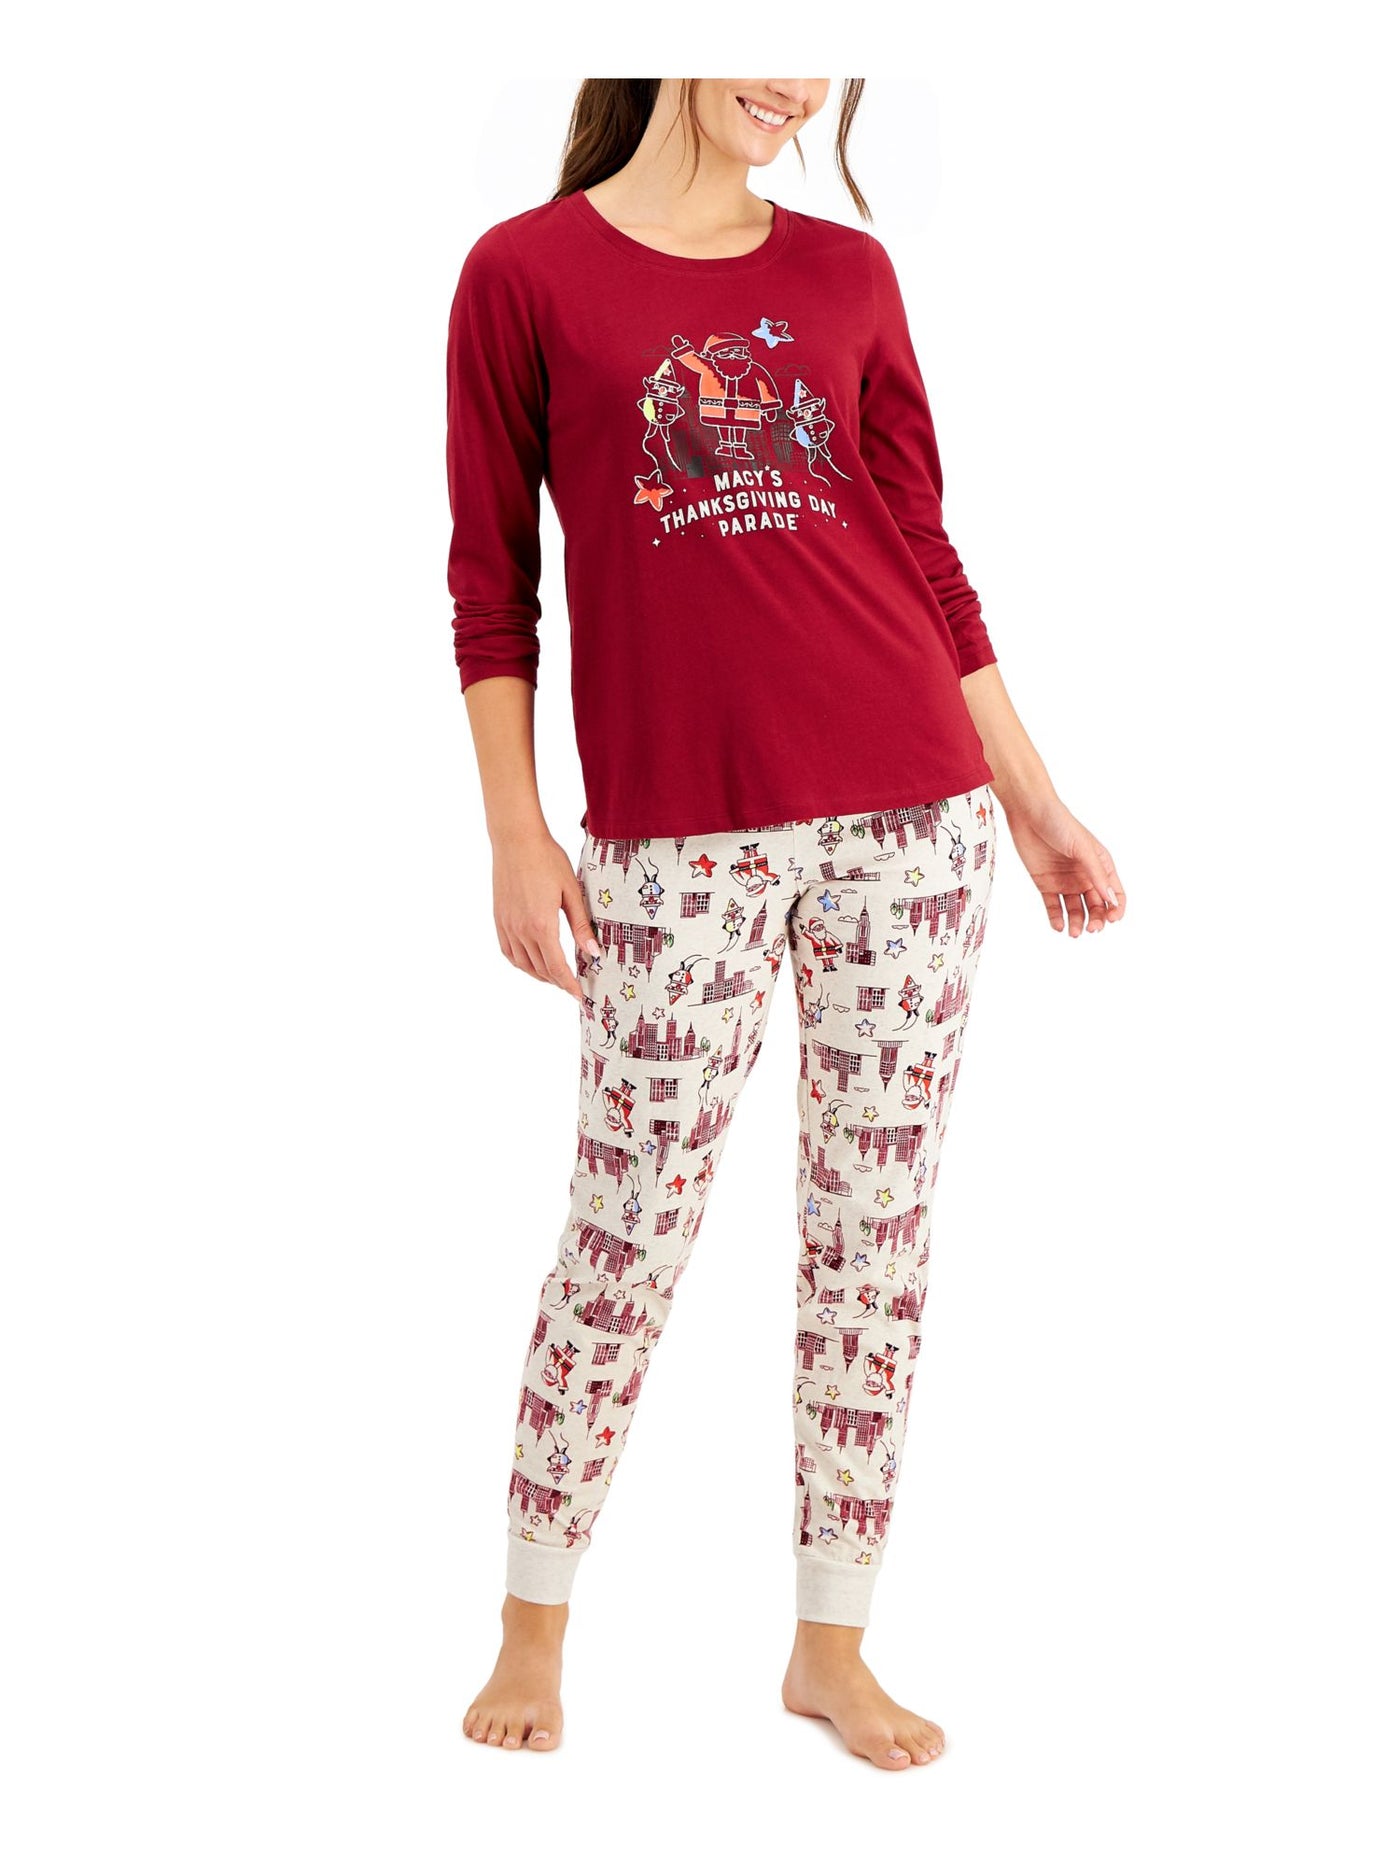 FAMILY PJs Womens Maroon Graphic Top Elastic Band Long Sleeve Lounge Pants Pajamas XL